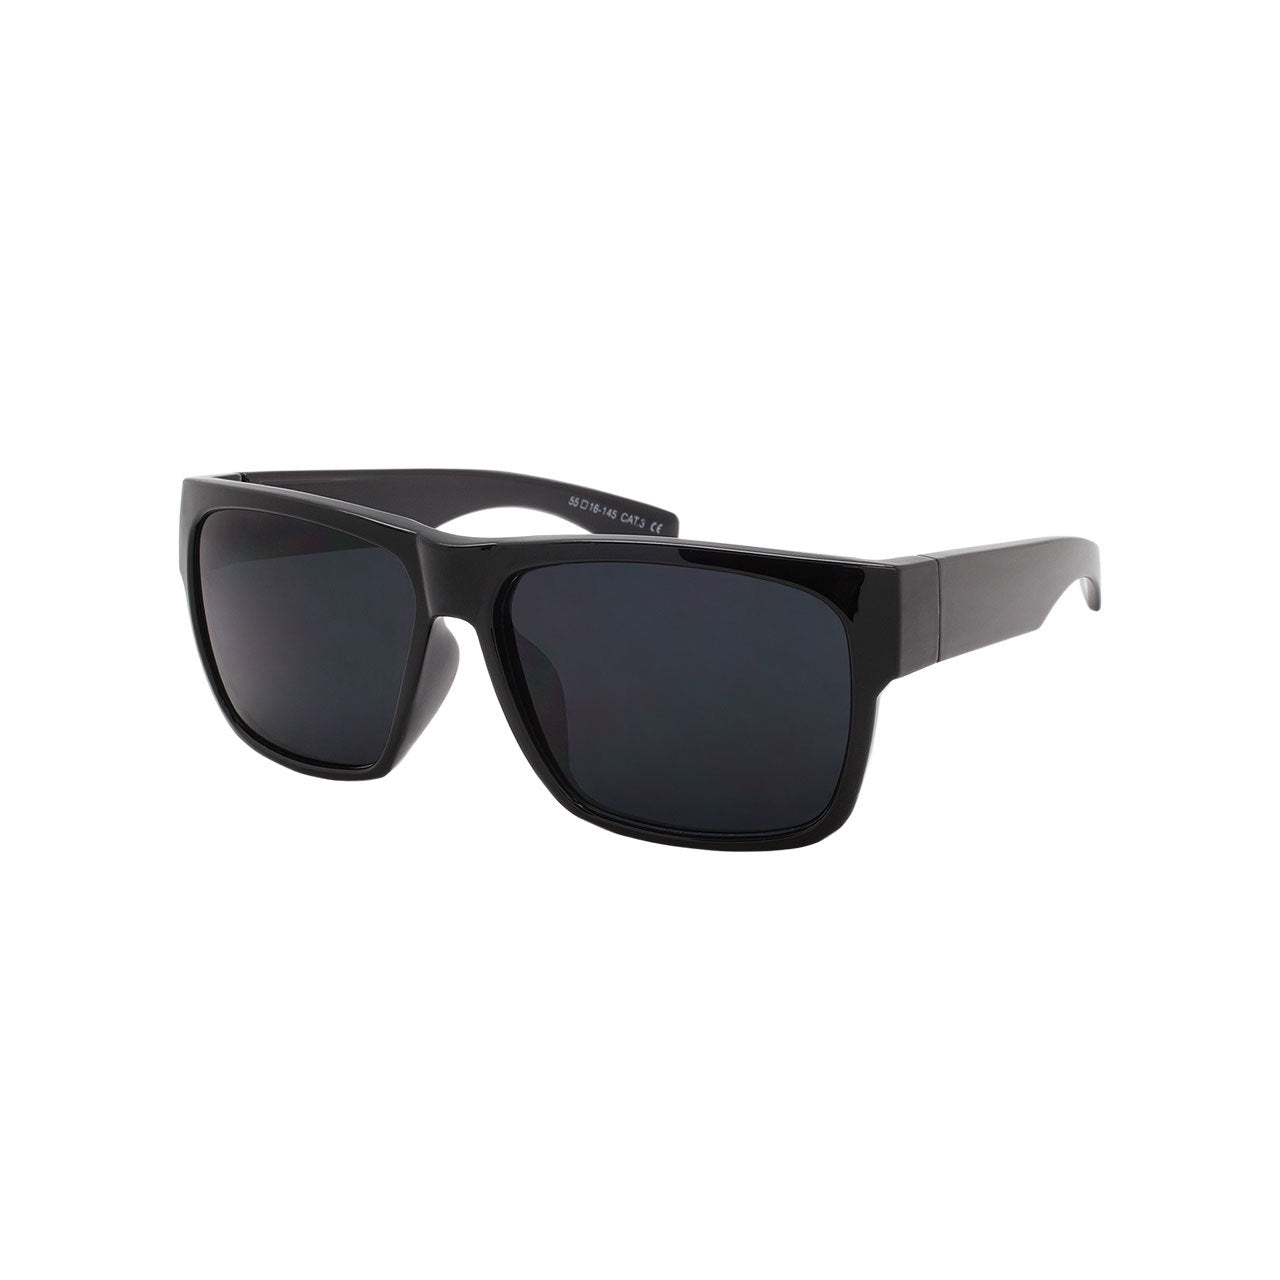 Category 4 sunglasses-Super Dark Sunglasses for sensitive eyes. | Page ...